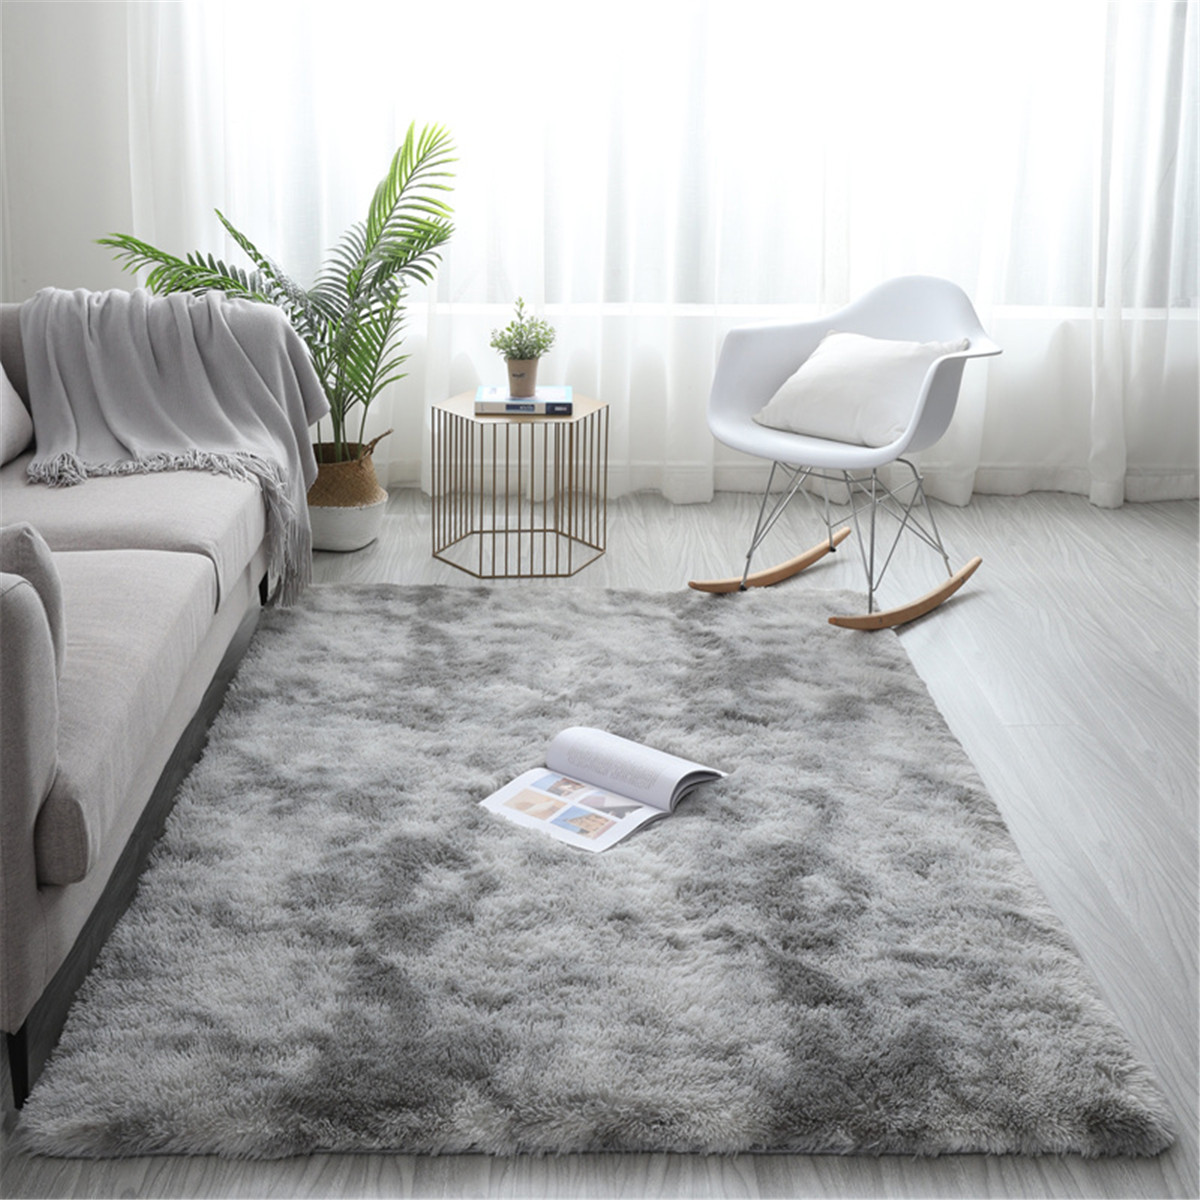 150X240CM-Tie-dyed-Gradient-Carpet-Long-Haired-Anti-slip-Carpet-For-Bedroom-Living-Room-Study-Room-1919744-8